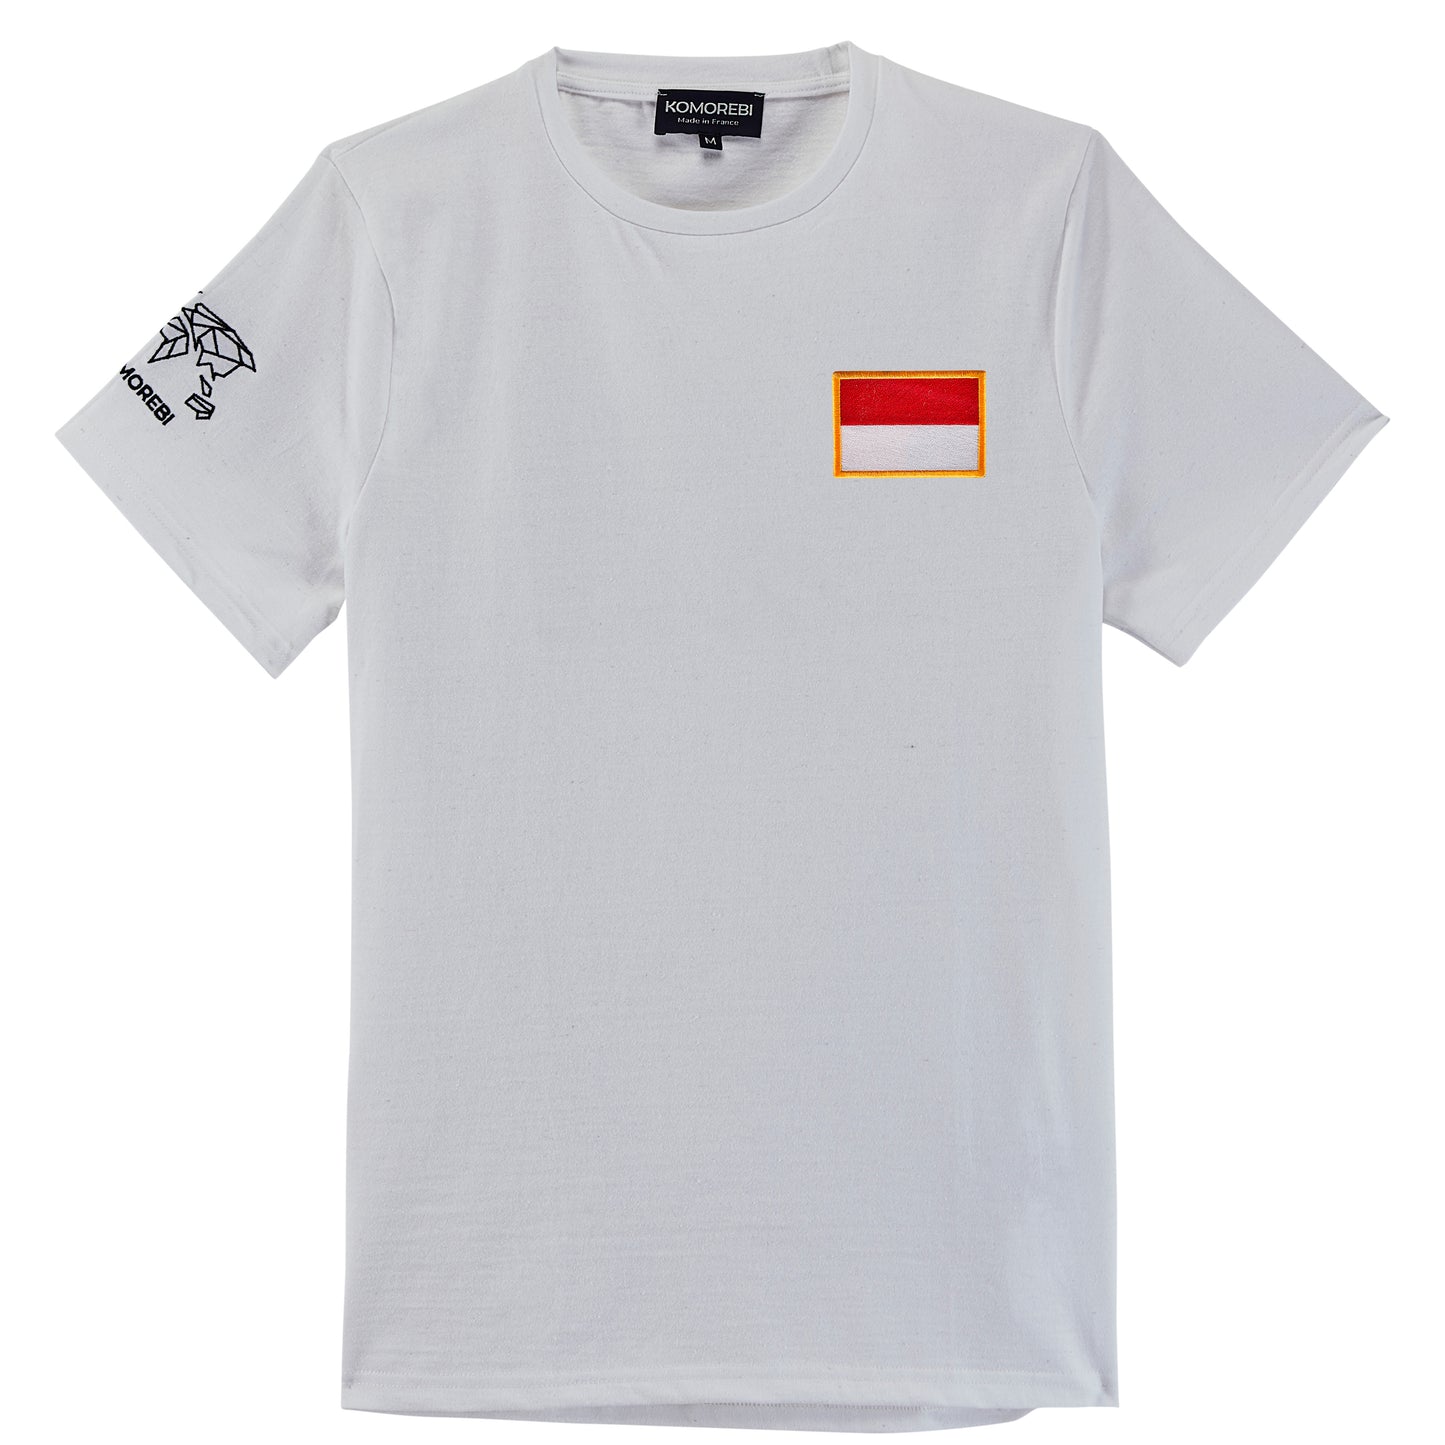 Indonesia • T-shirt